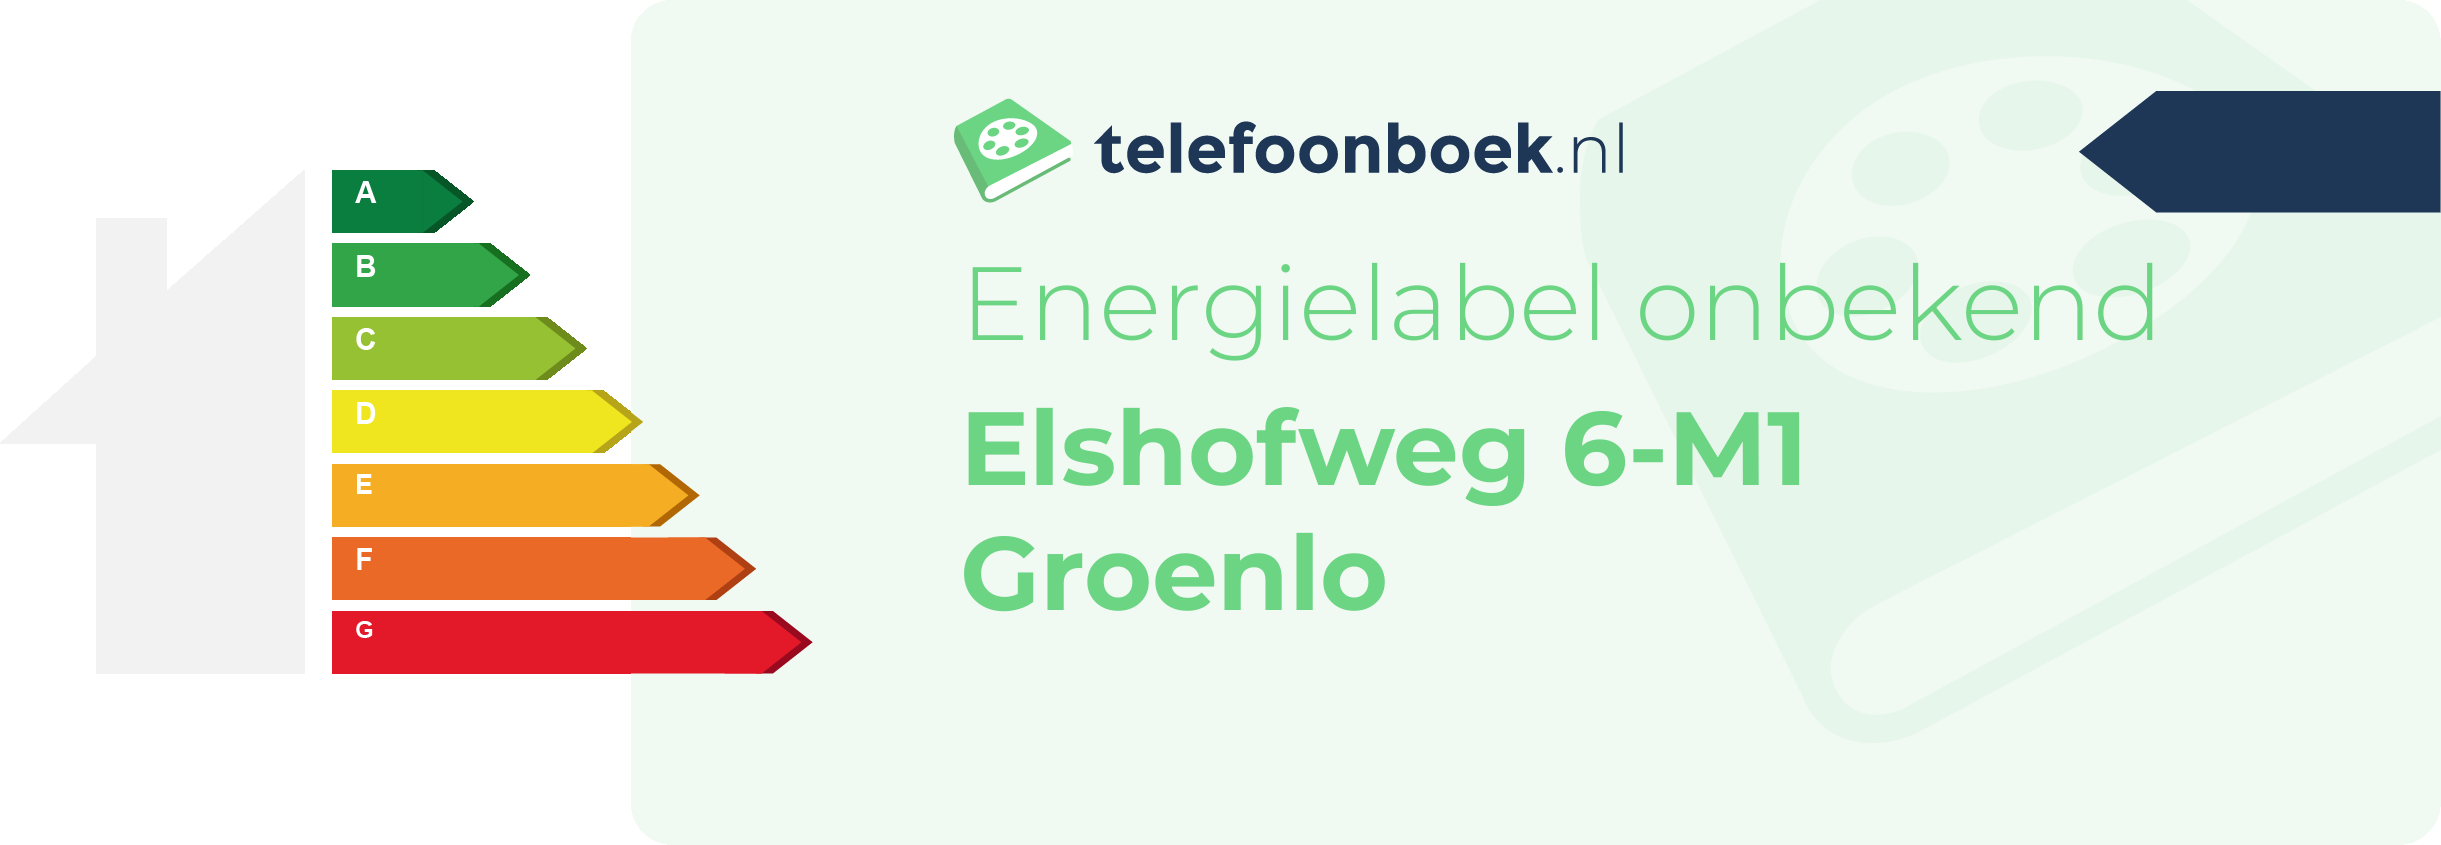 Energielabel Elshofweg 6-M1 Groenlo